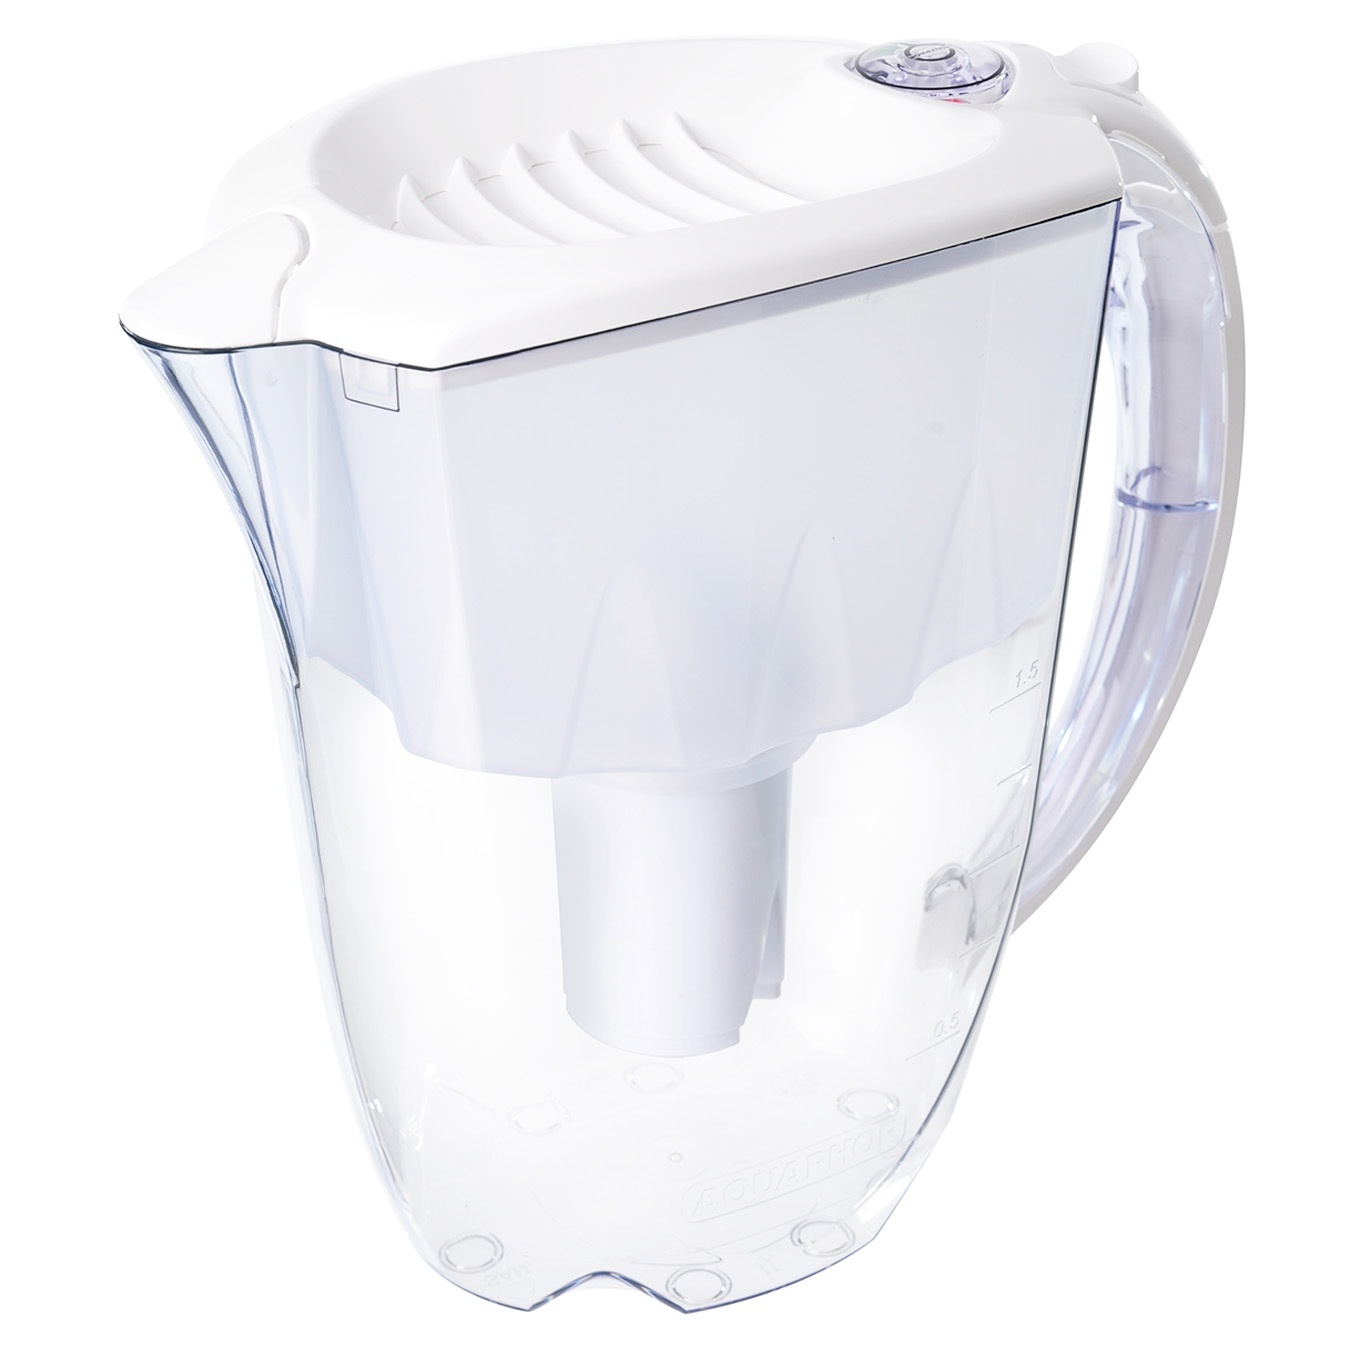 Water purifier jug Aquafor Ideal white